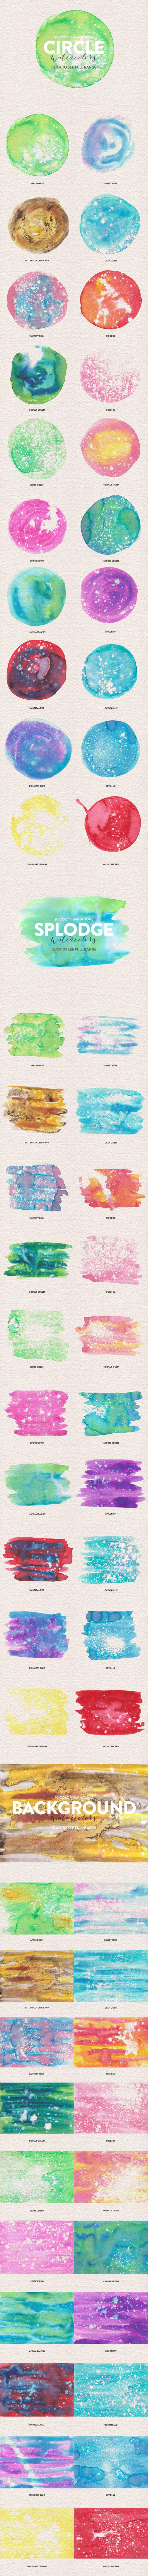 60 Textured Watercolors - Volume 1